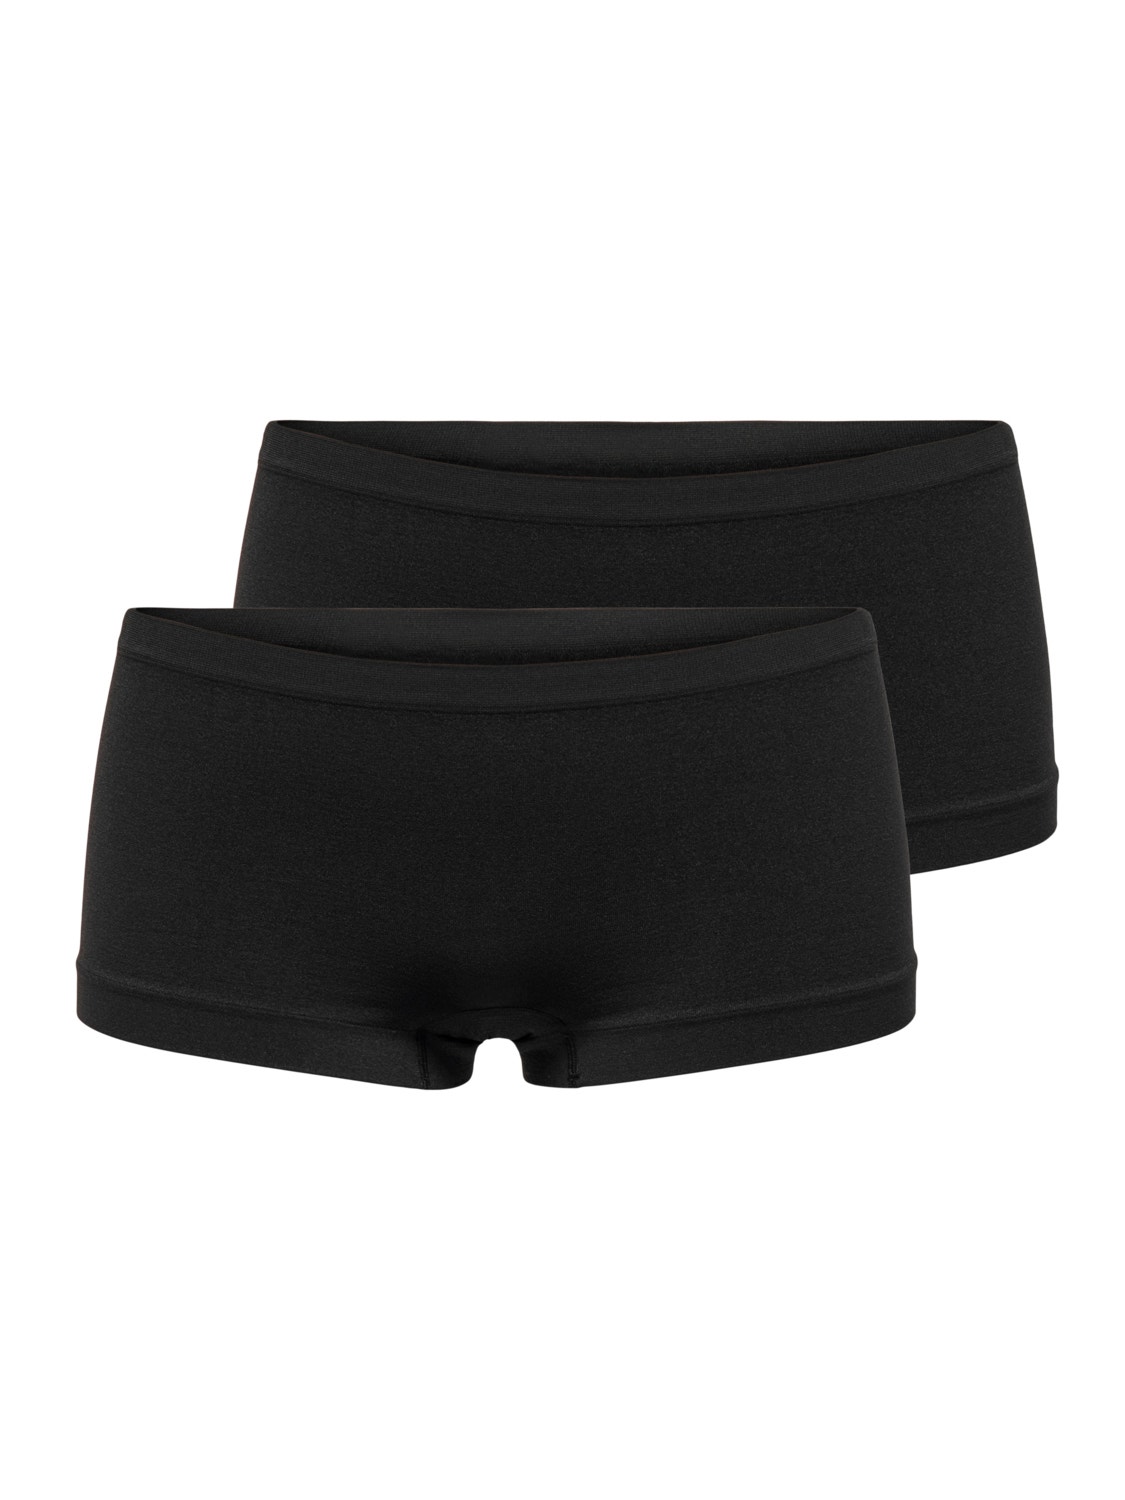 ALYA UNDERWEAR Women's Bato \ Hipster Panties - 3 Pieces Black (XL